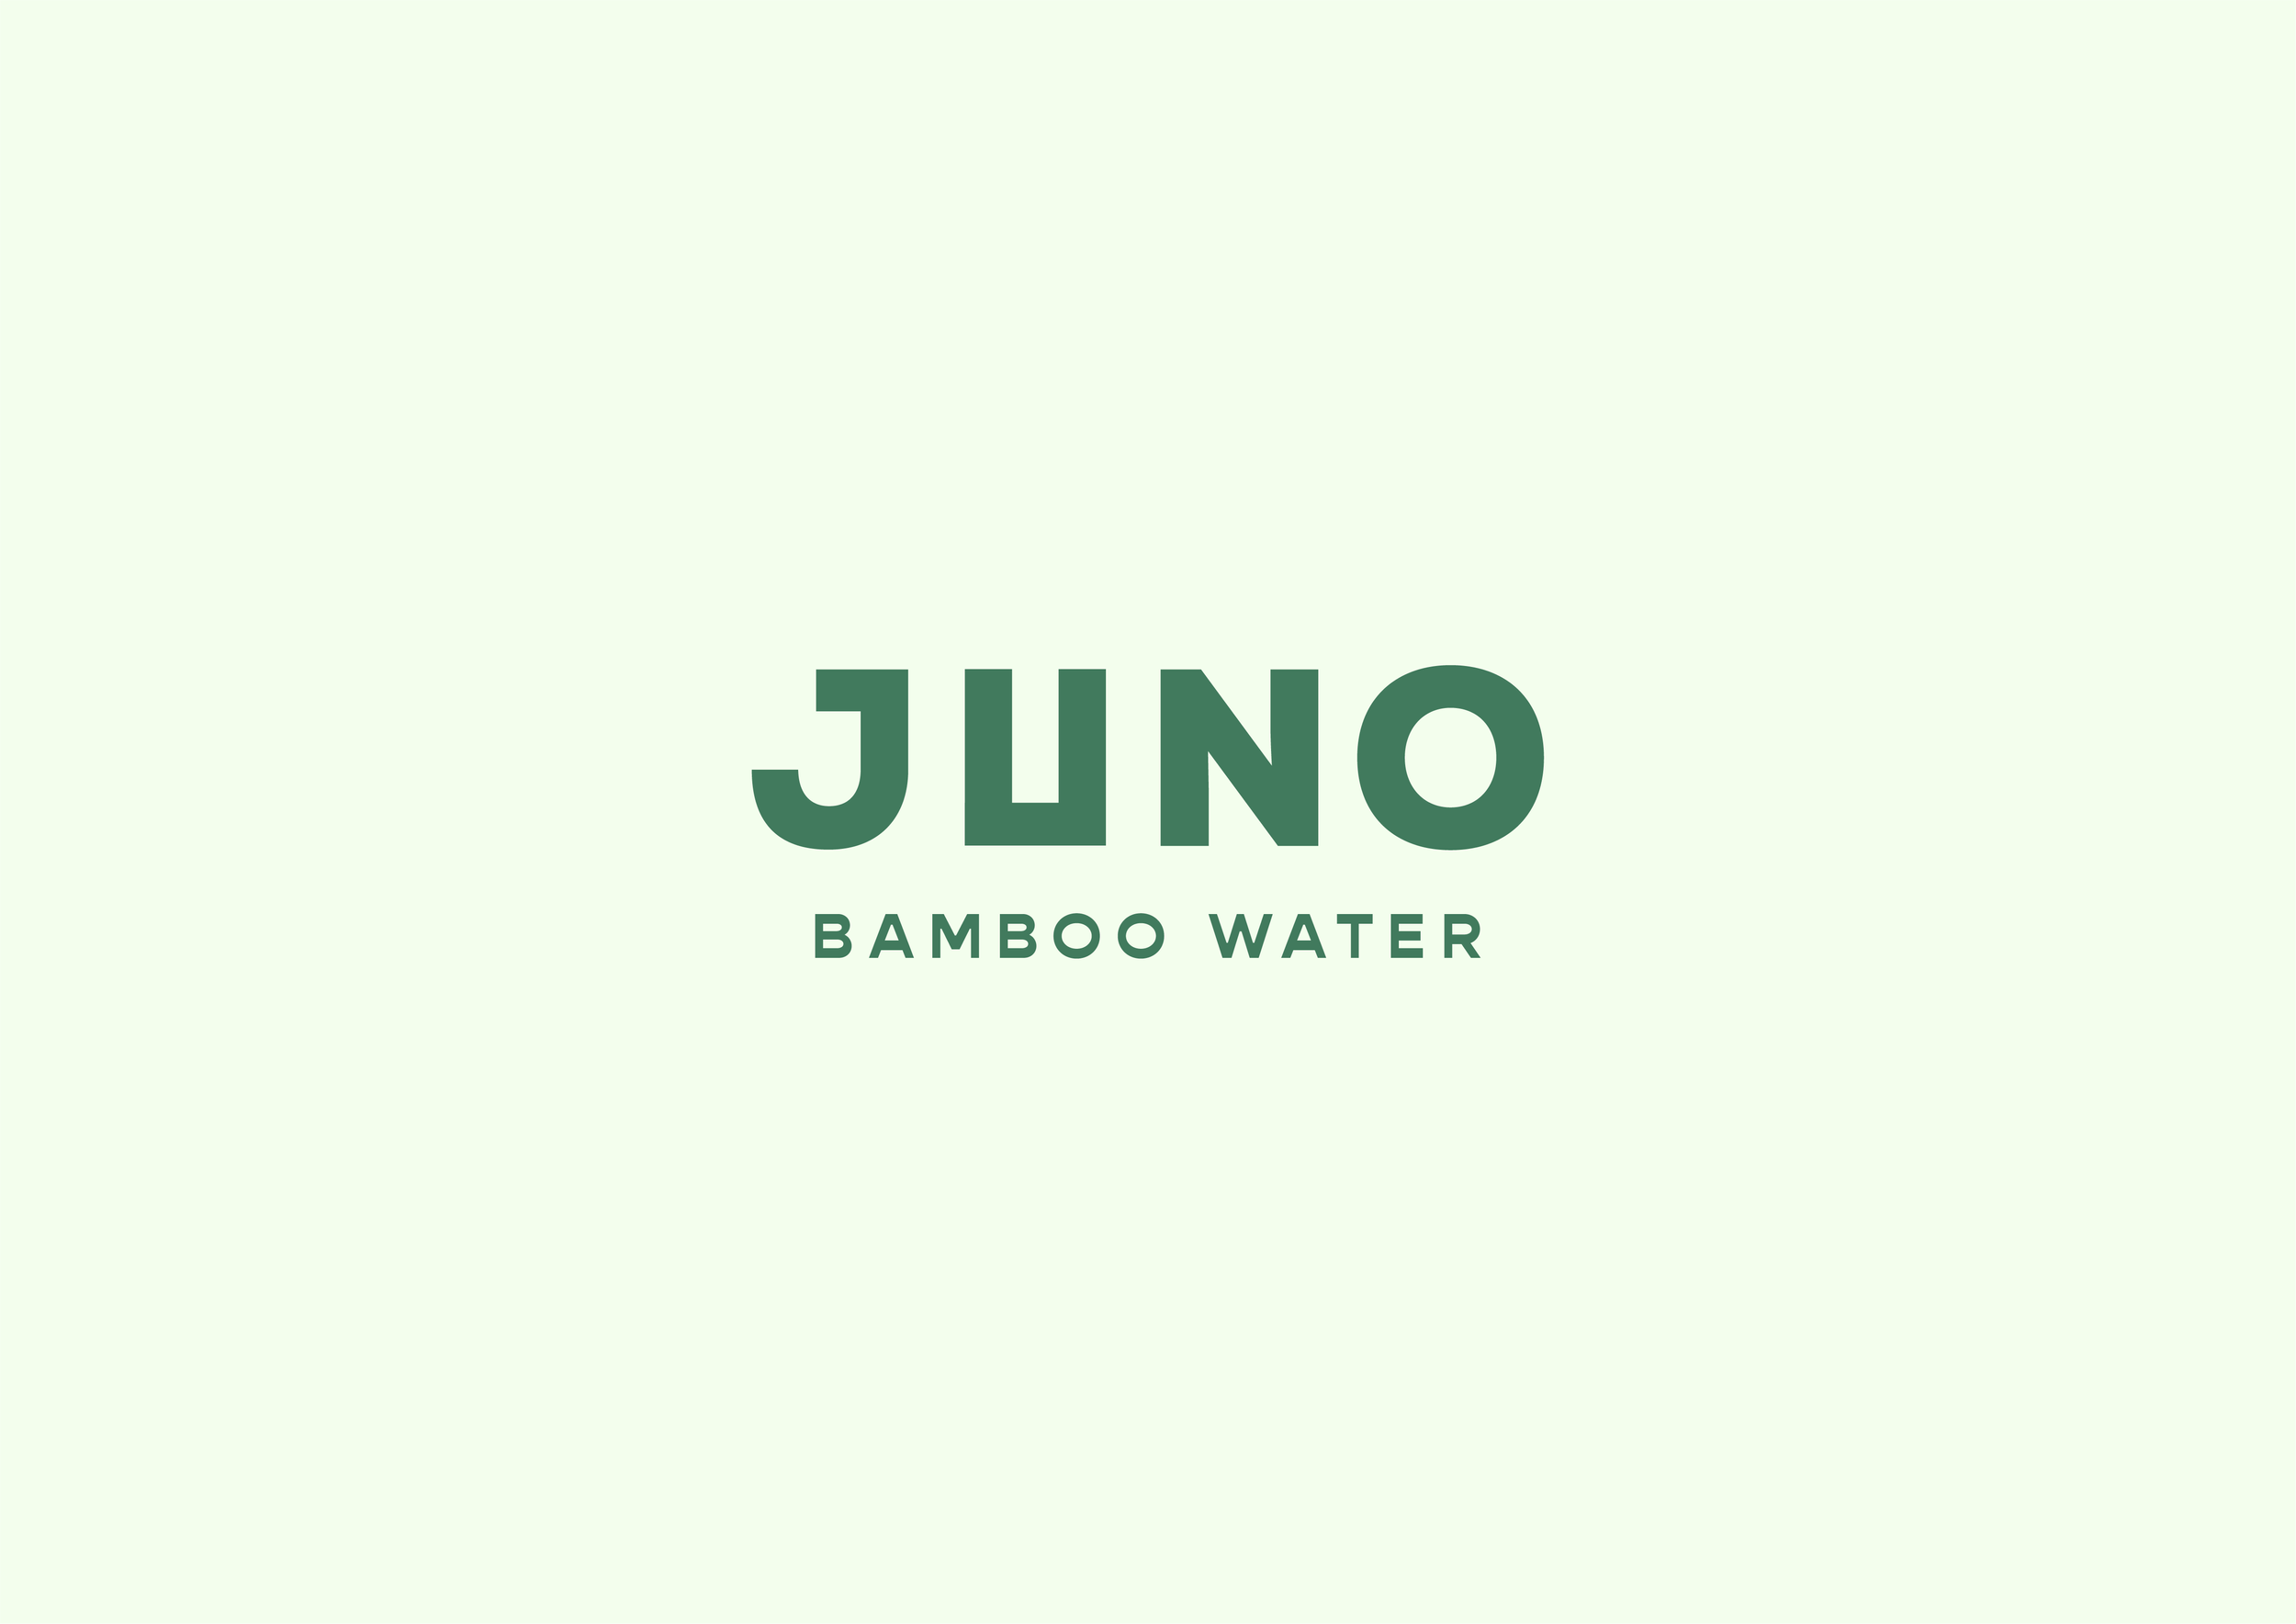 Juno bamboo water font logo in tea green background